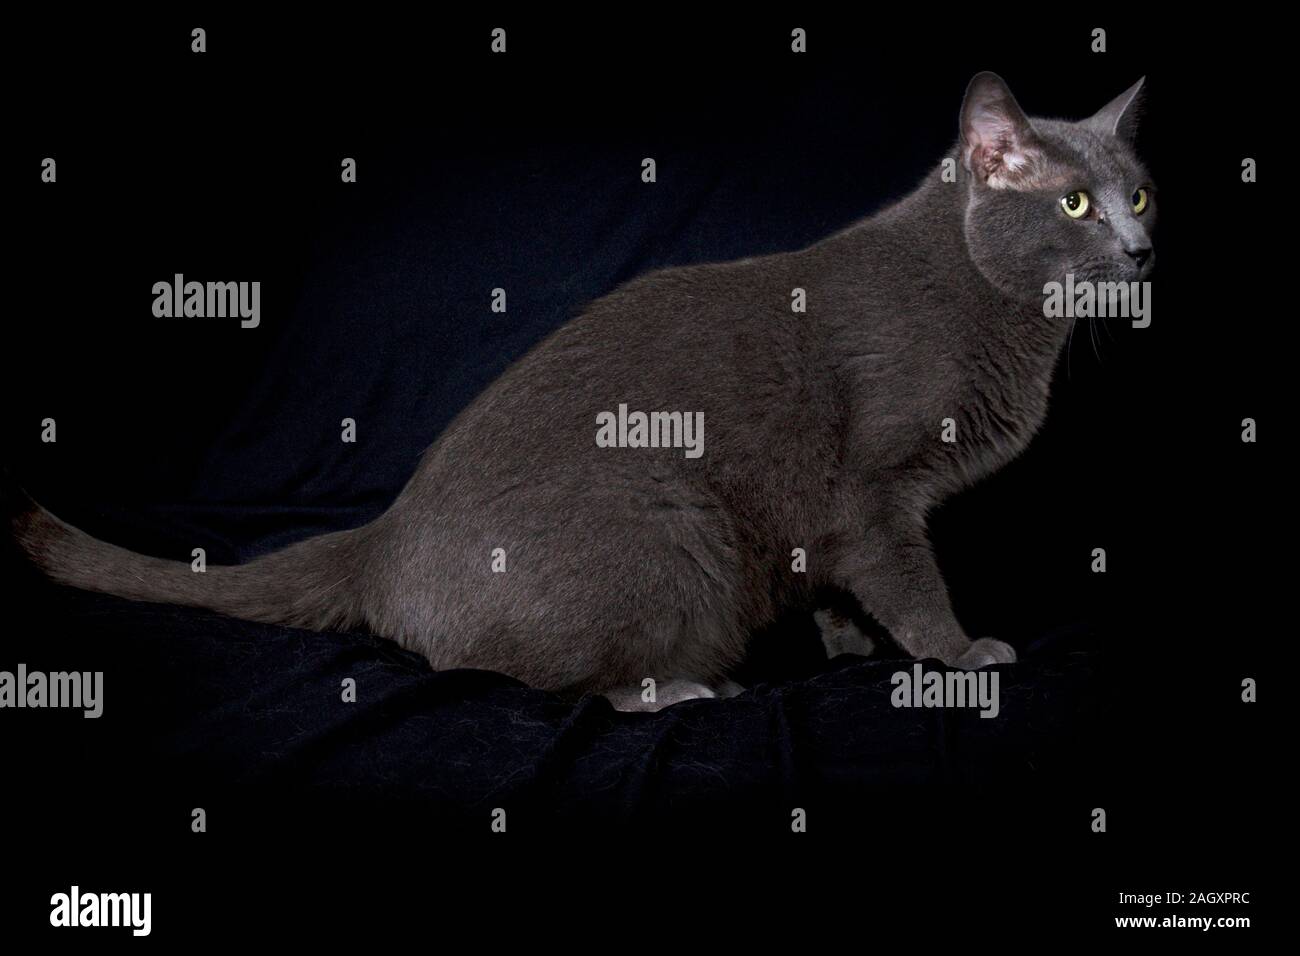 Black Cat In Profile On Banque D Image Et Photos Alamy